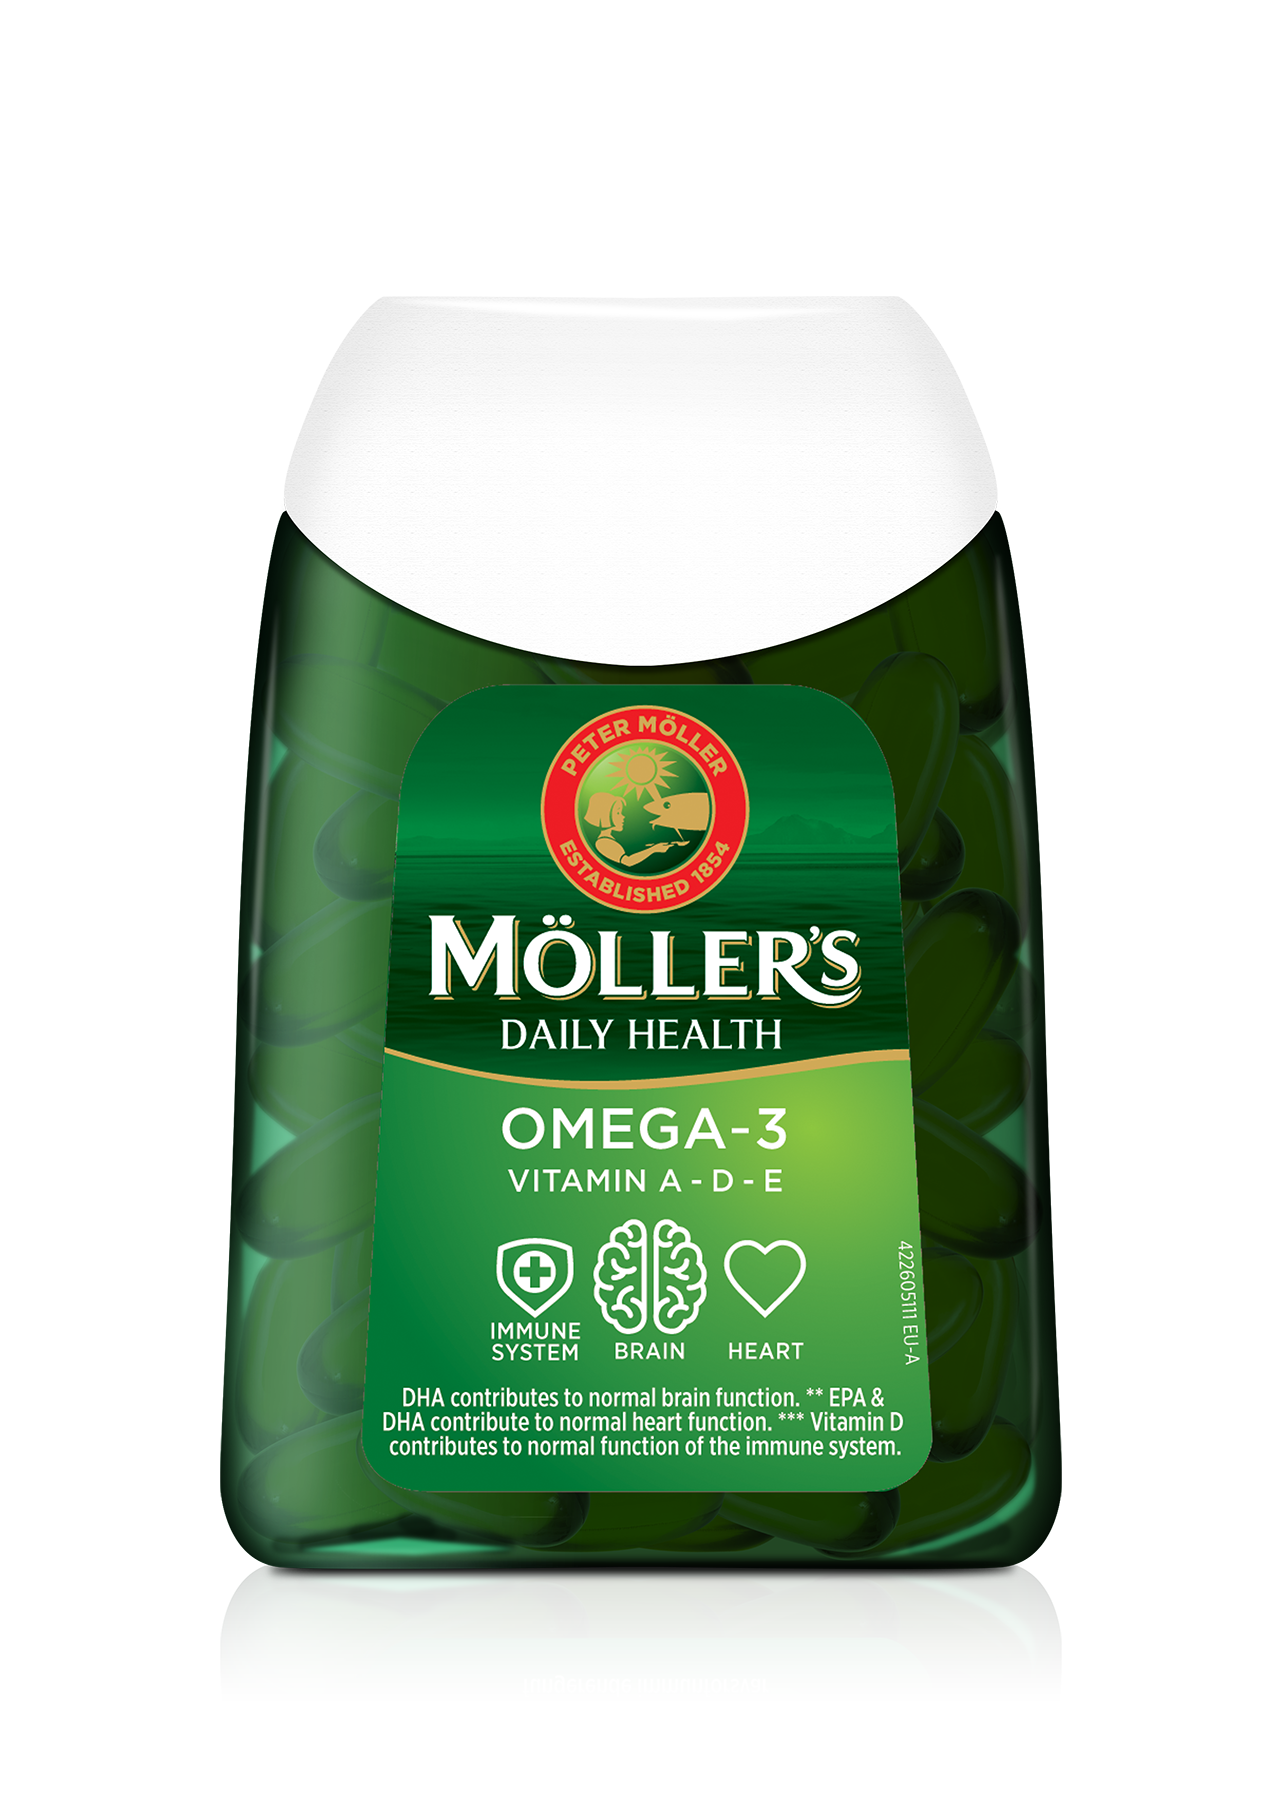 Victor applaus Intact Möller's Daily Health omega-3 capsules – Möller's